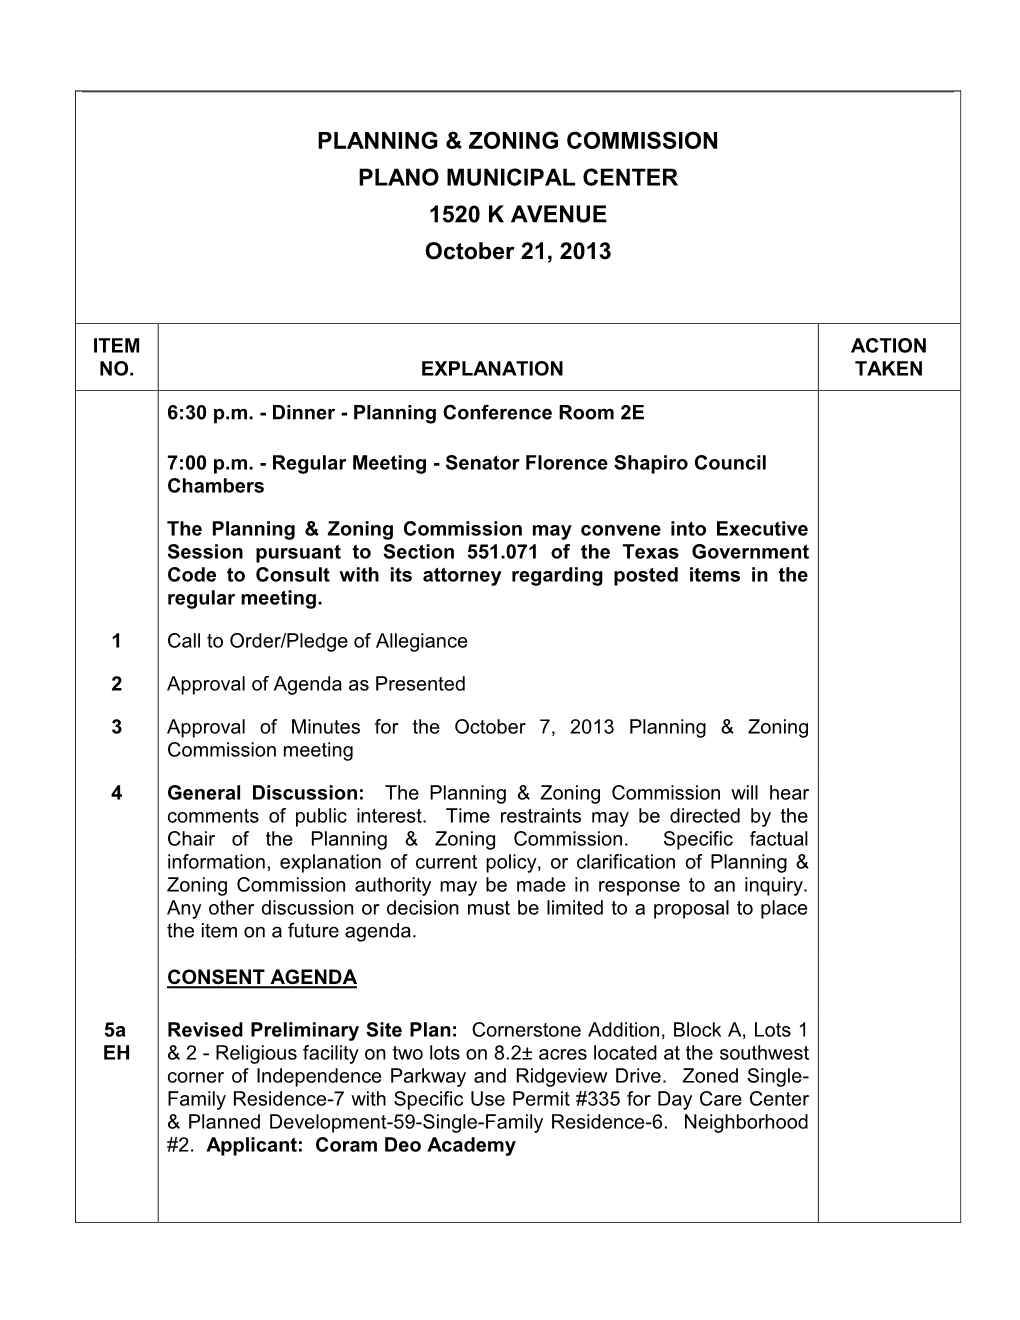 Planning & Zoning Commission Plano Municipal Center 1520